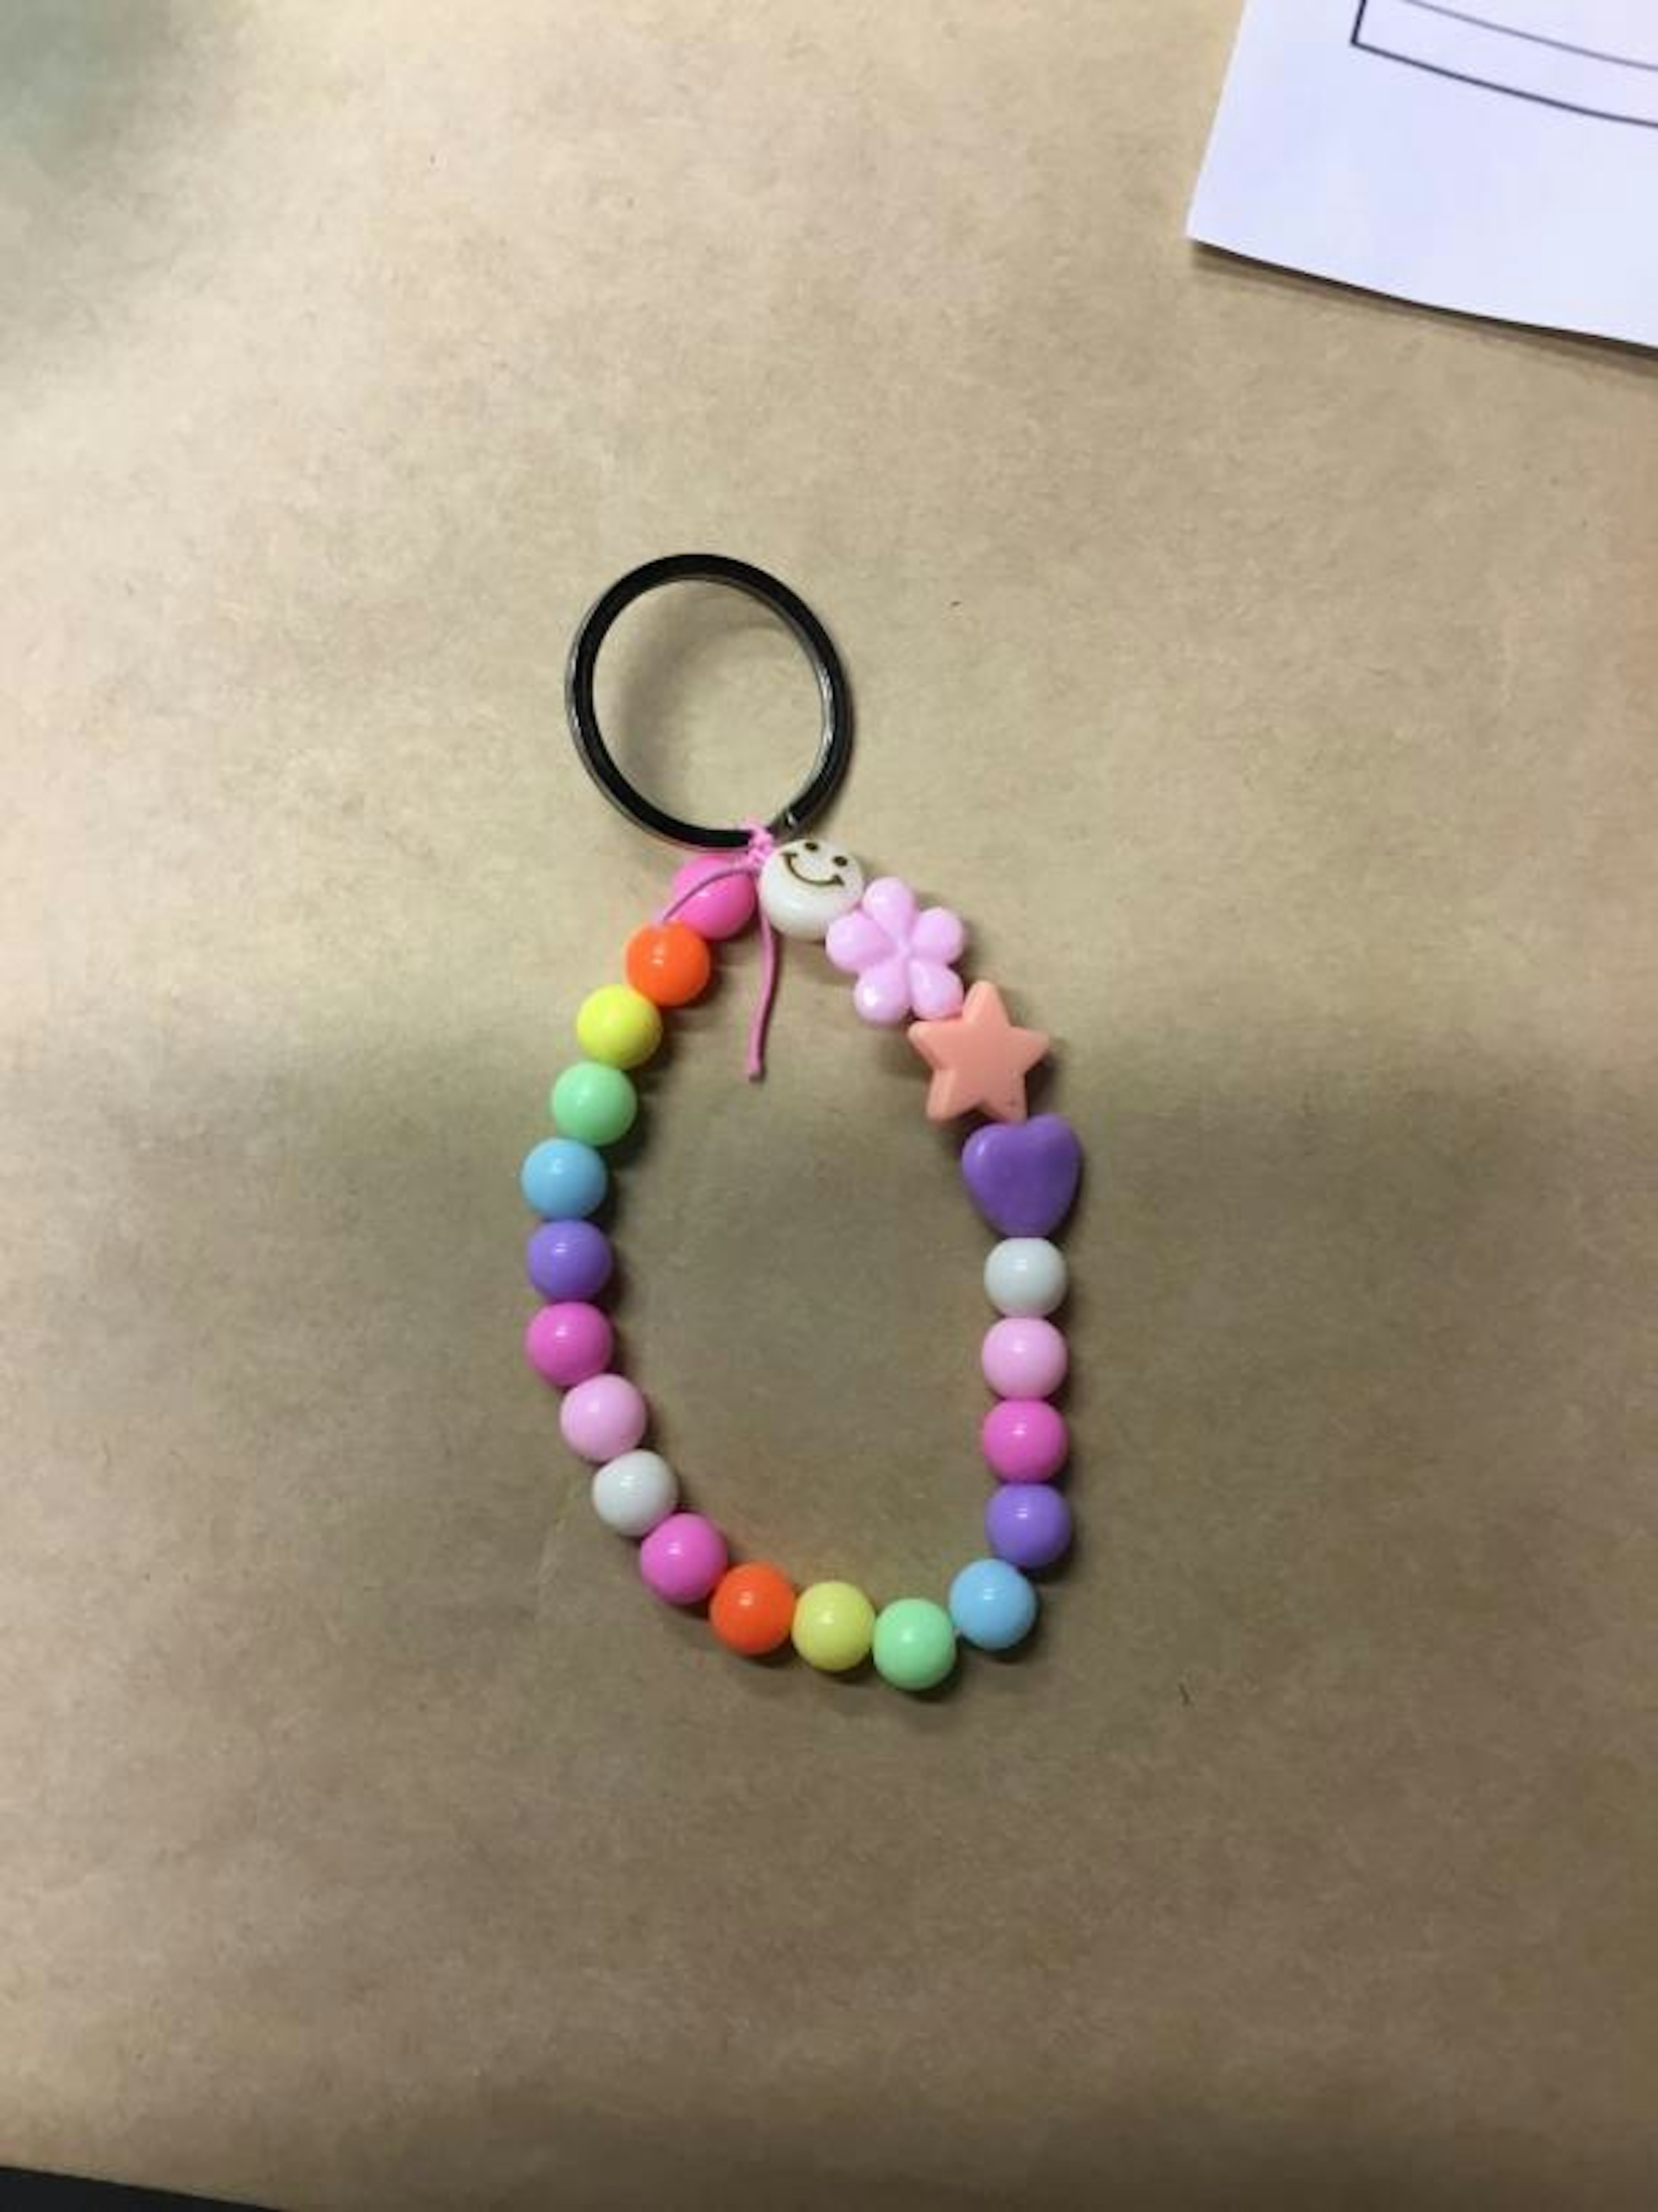 I made a rainbow key chain